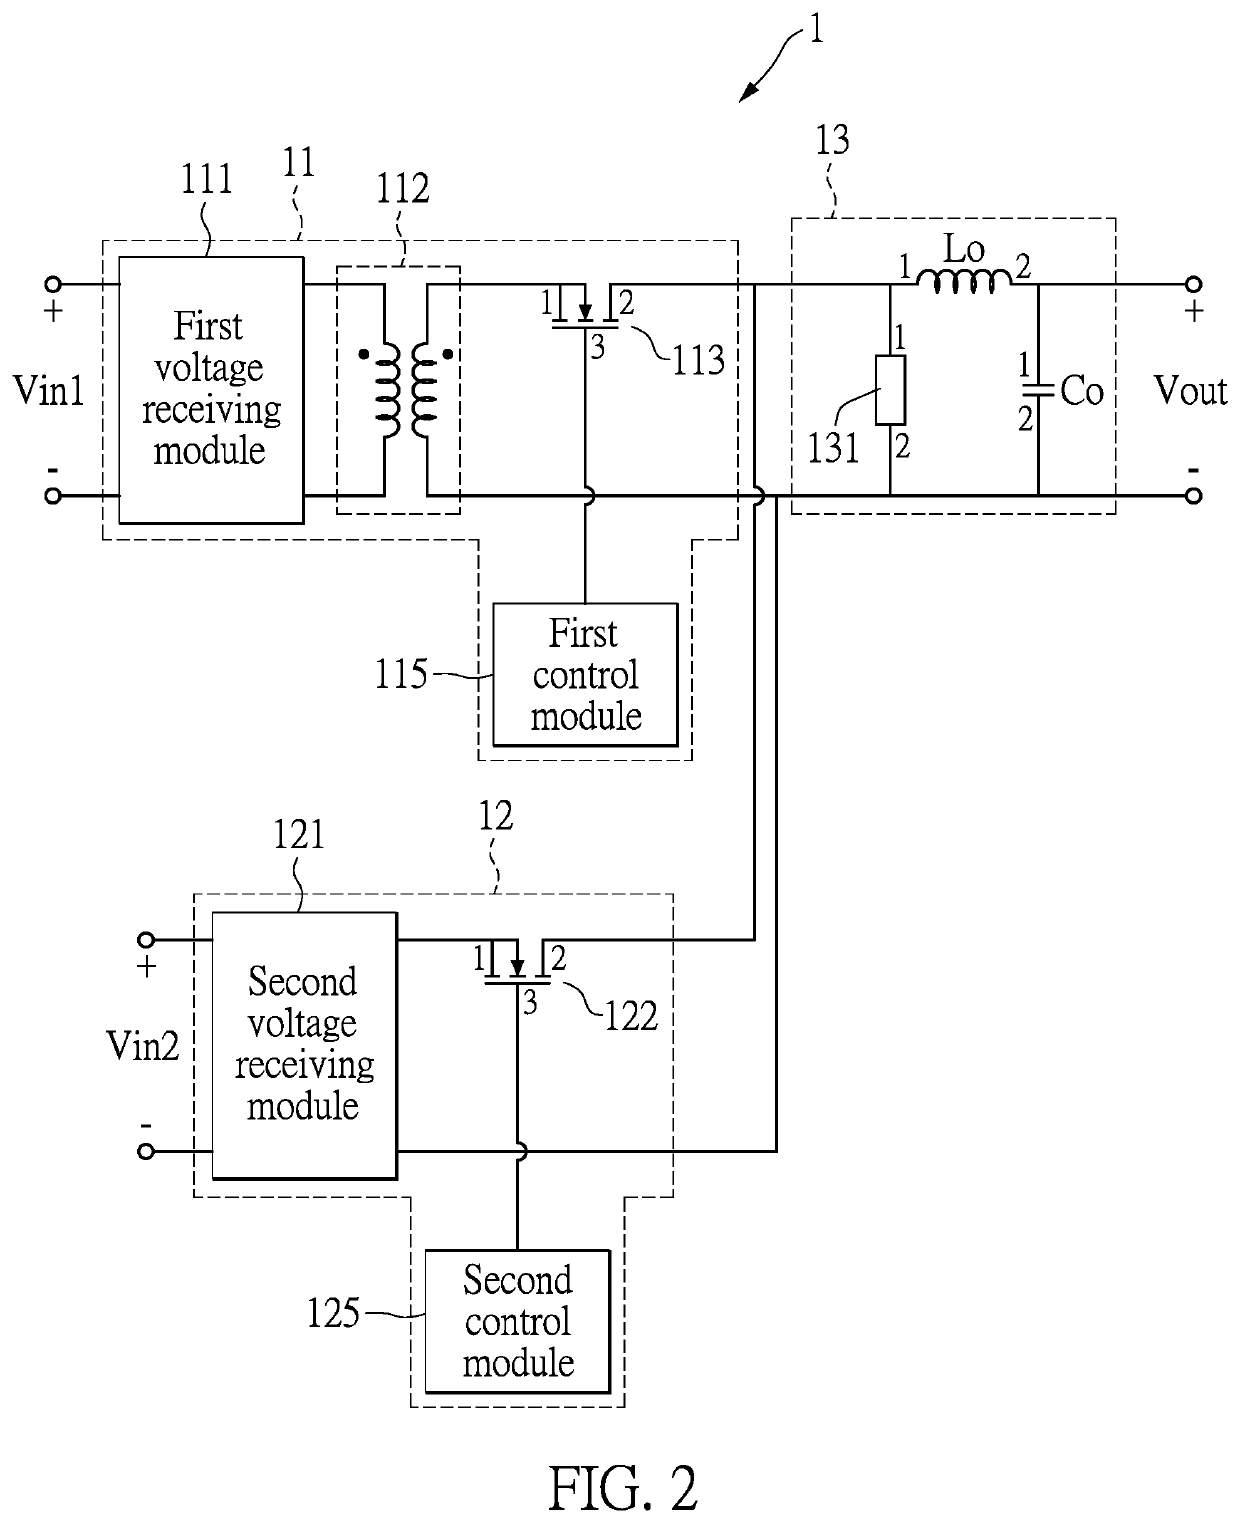 Multi-input voltage converter